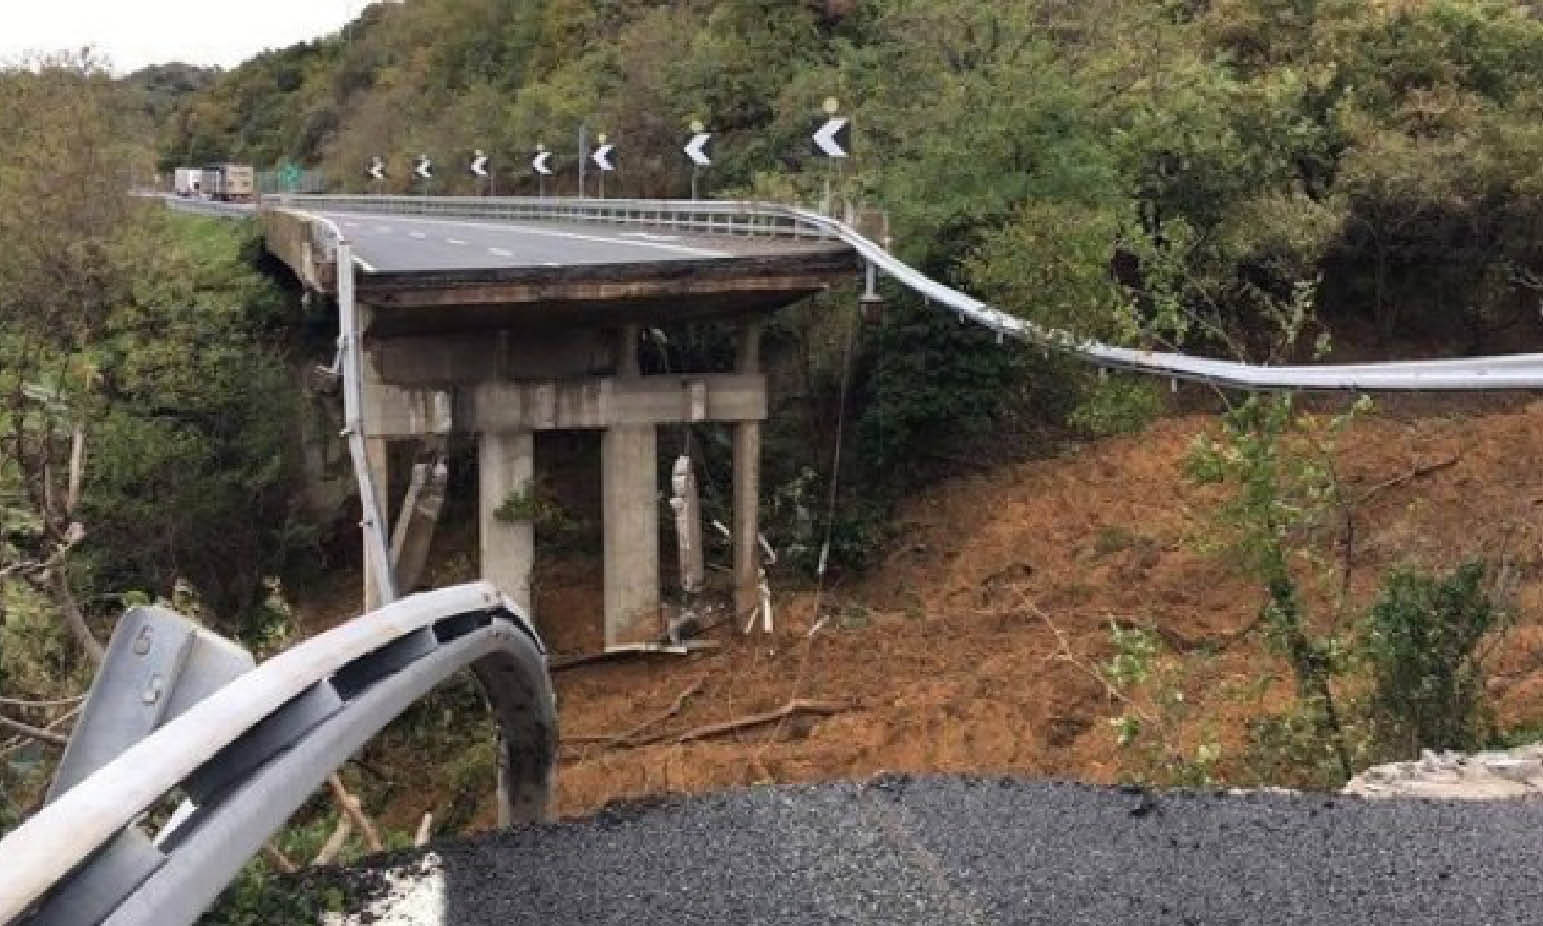 It’s raining again! Another fallen bridge in Italian highways. Viaduct’s security: open investigations